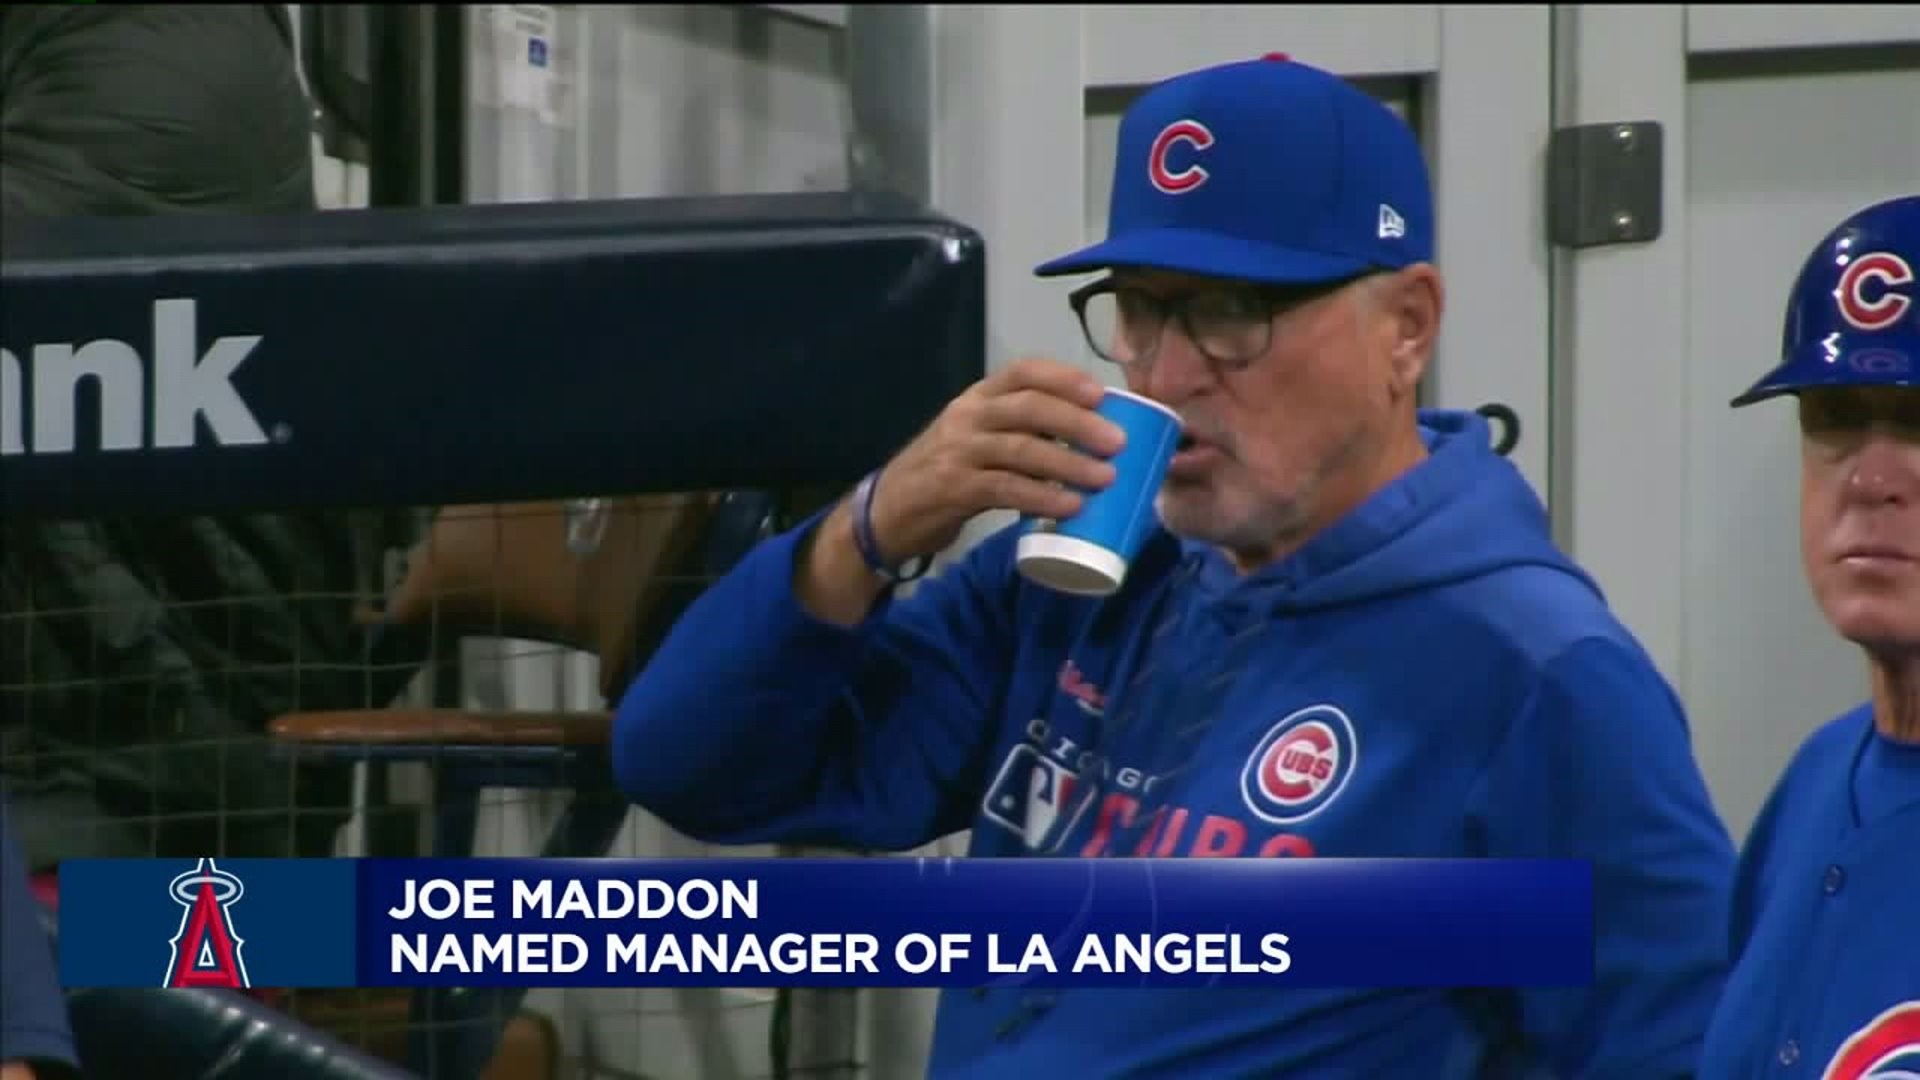 Joe Maddon named manager of the LA Angels